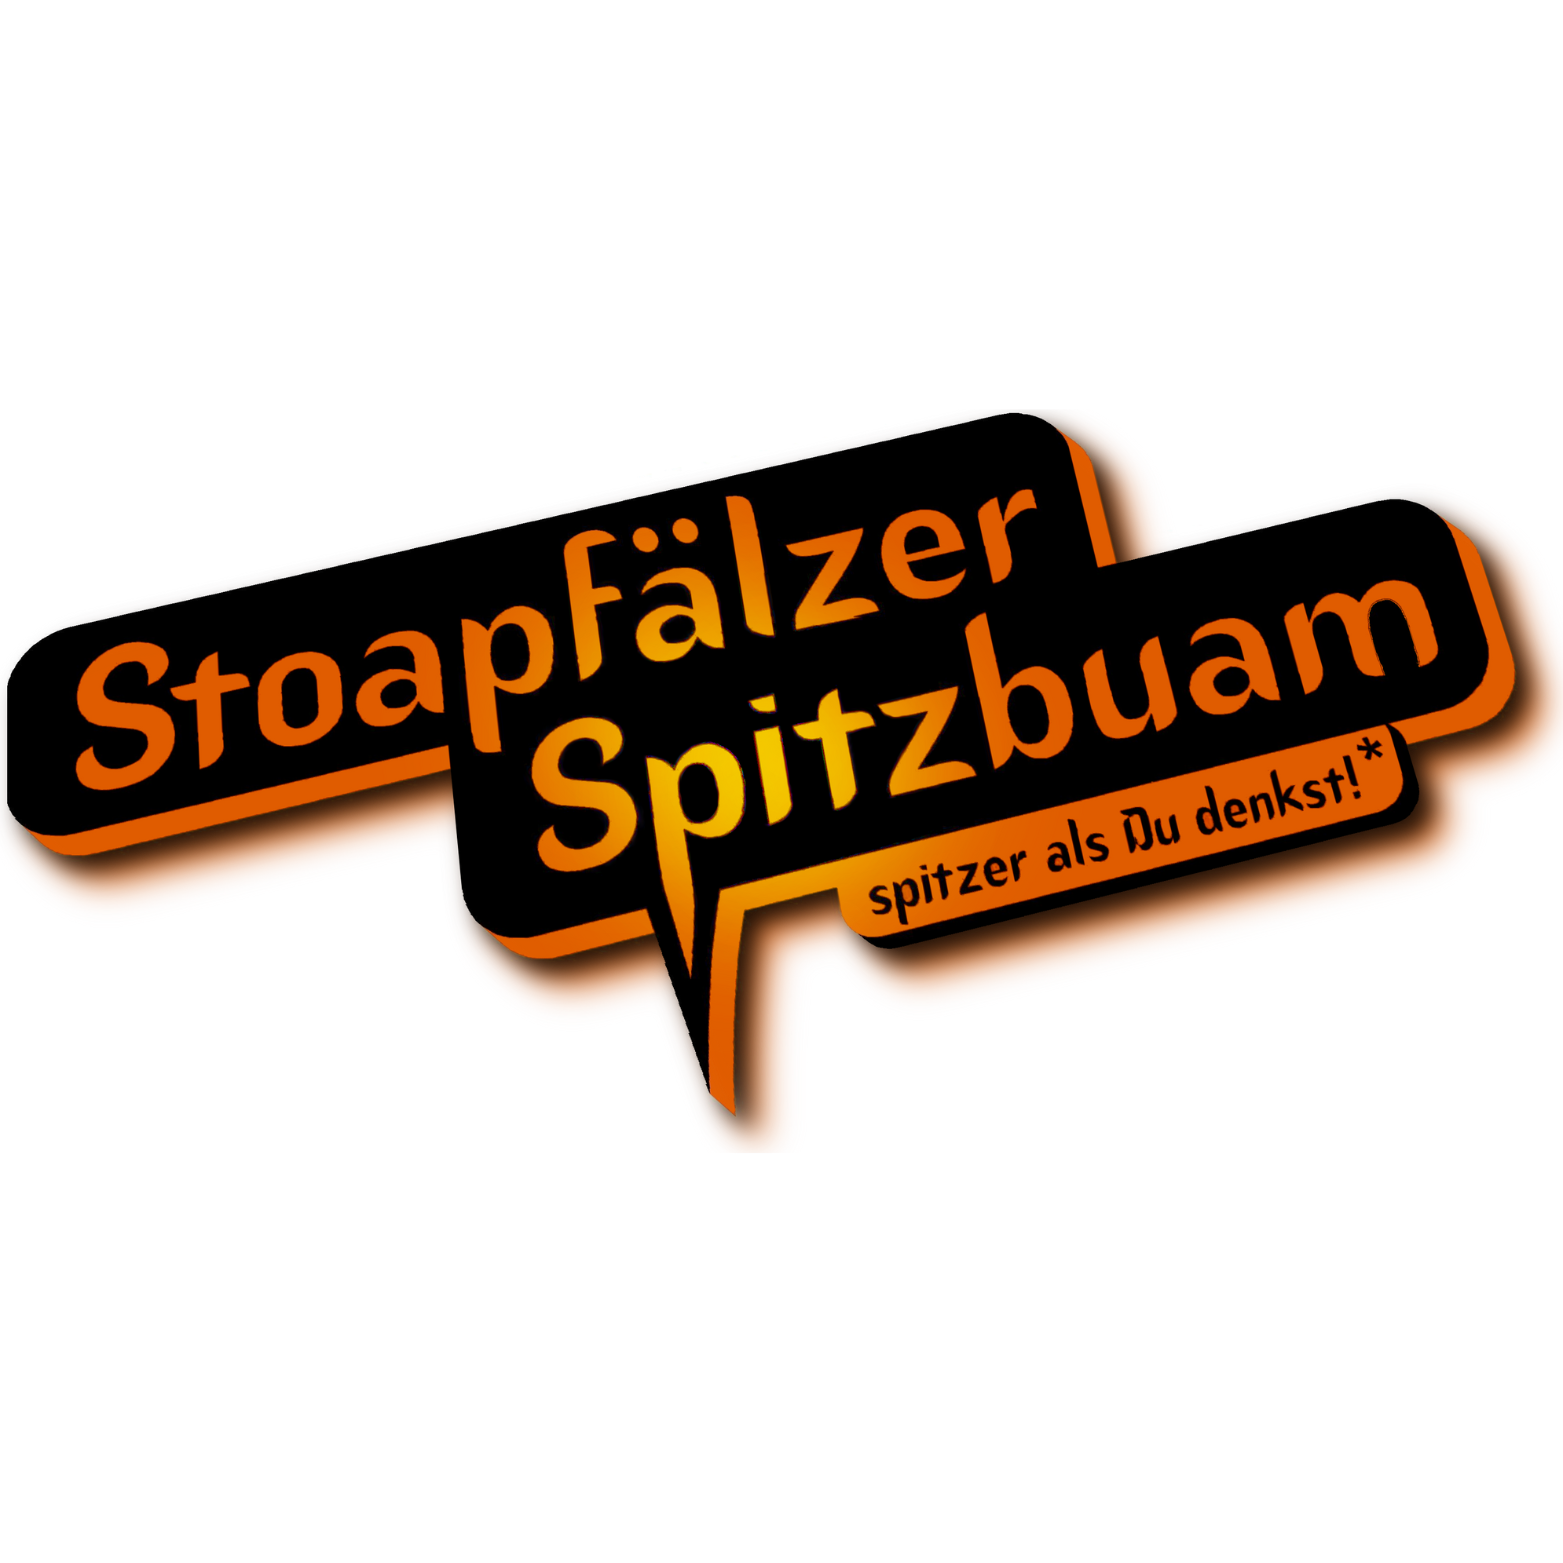 Stoapfälzer Spitzbuam